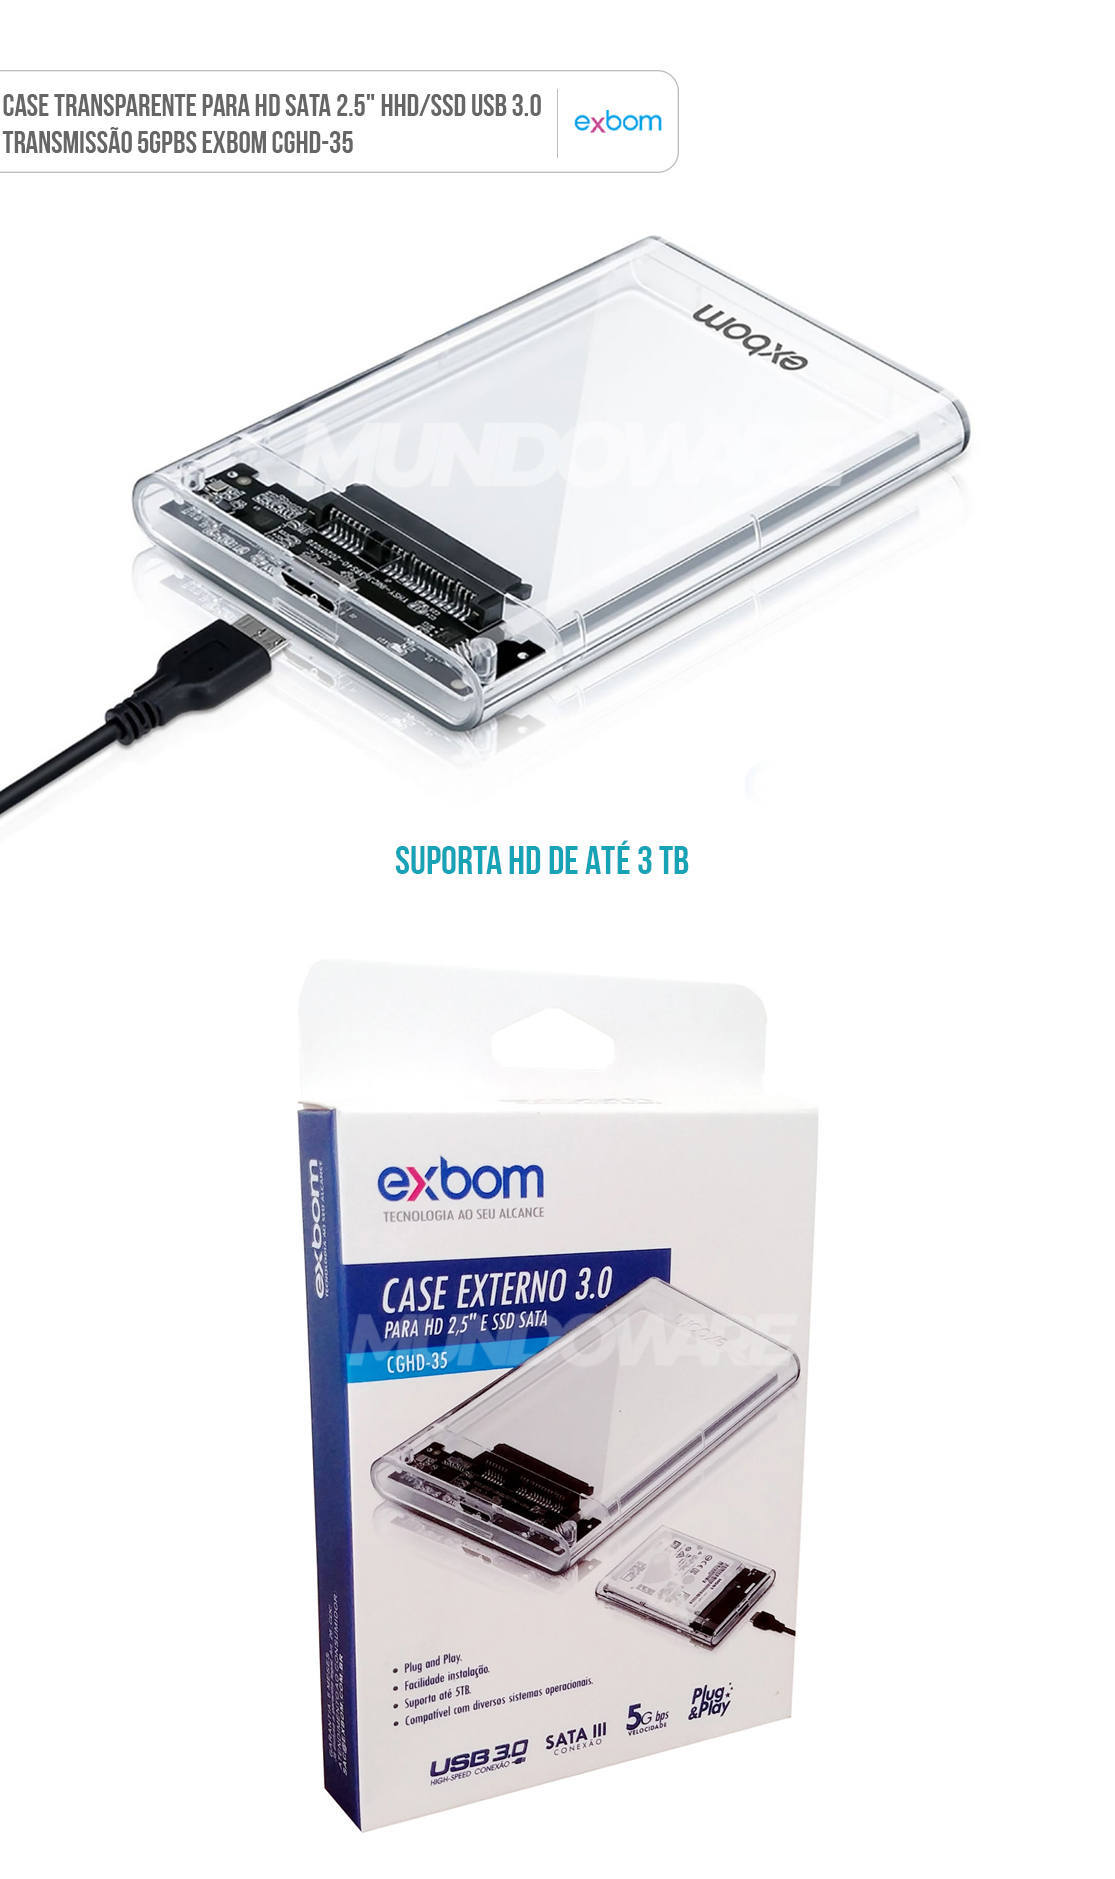 Case Externo USB 3.0 Transparente para HD 2.5 SSD SATA Exbom CGHD-35